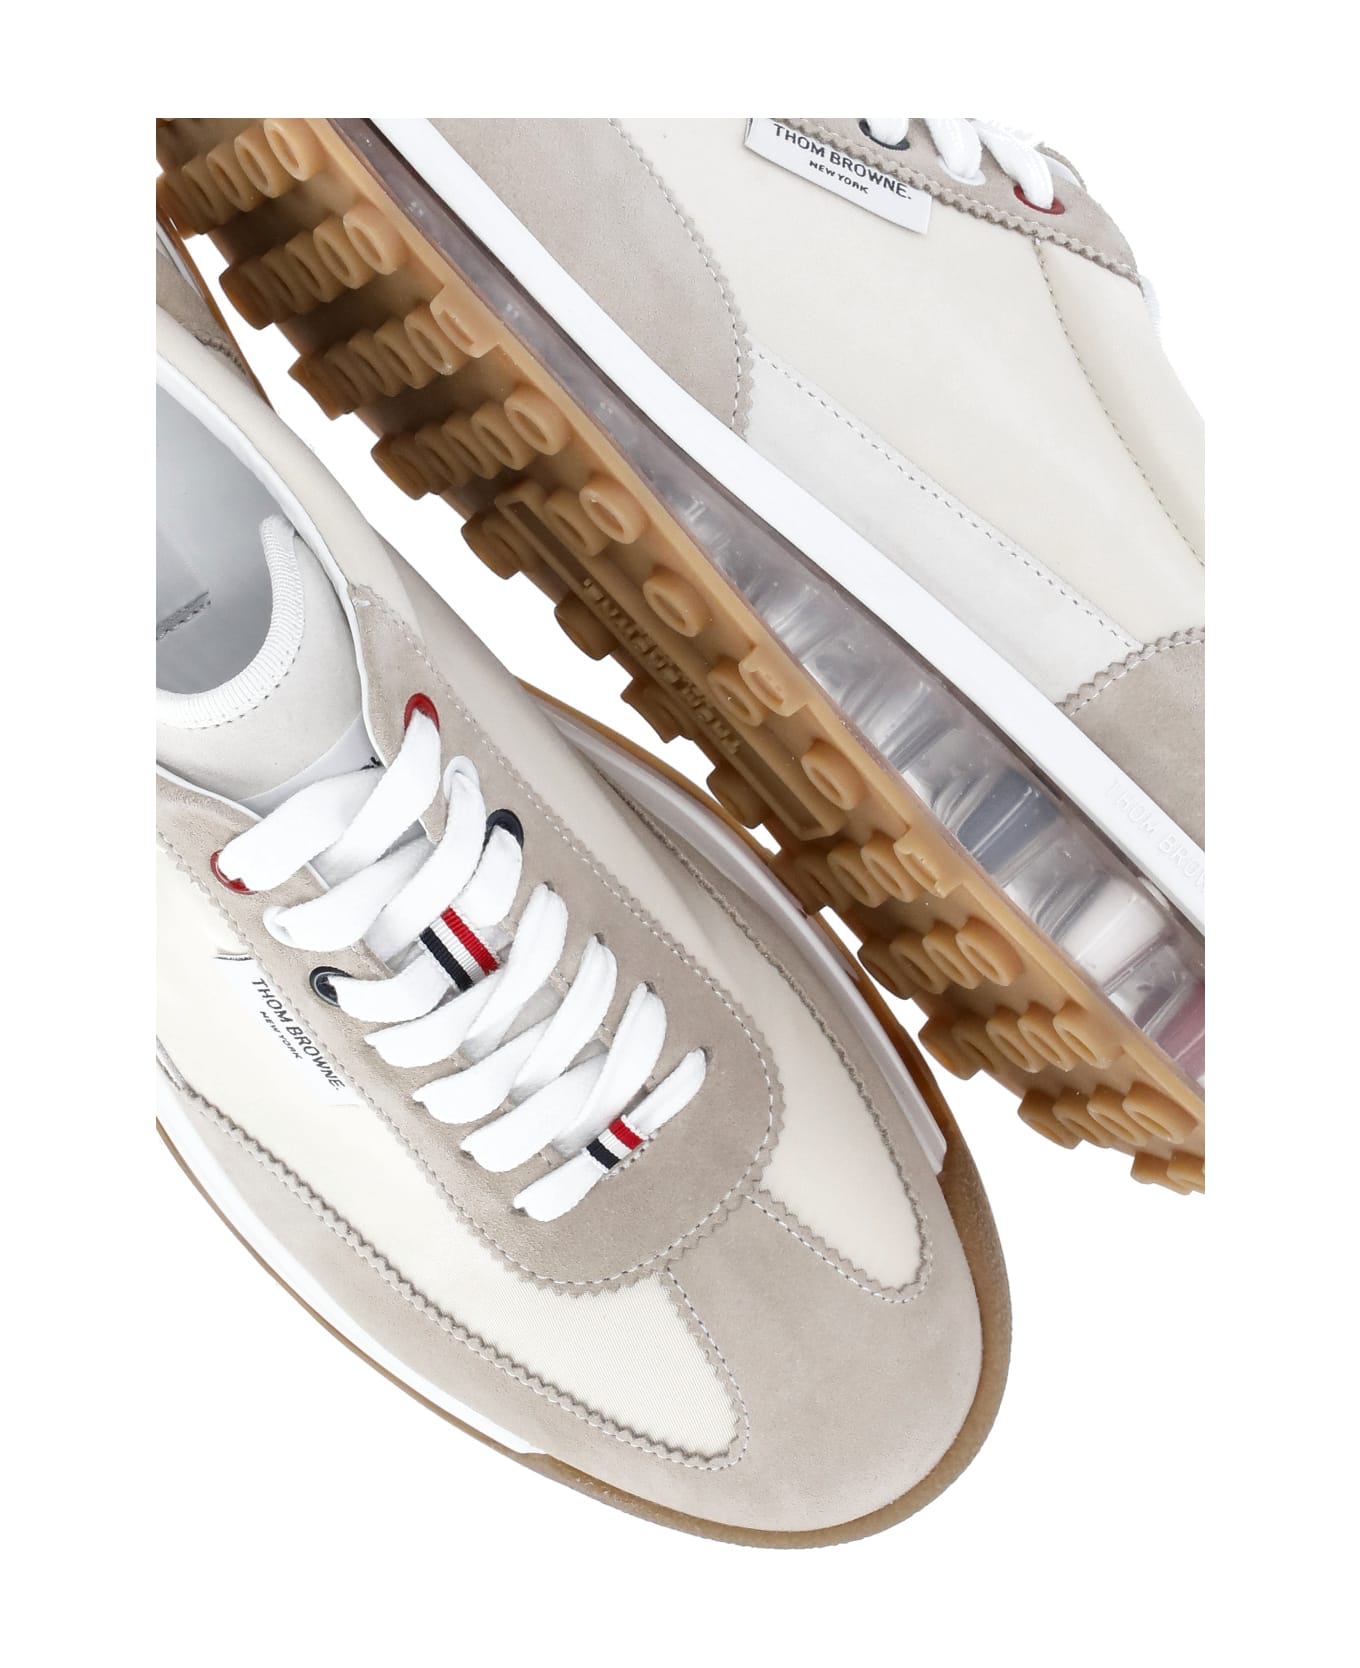 Thom Browne 'tech Runner' Leather Sneakers - Beige スニーカー